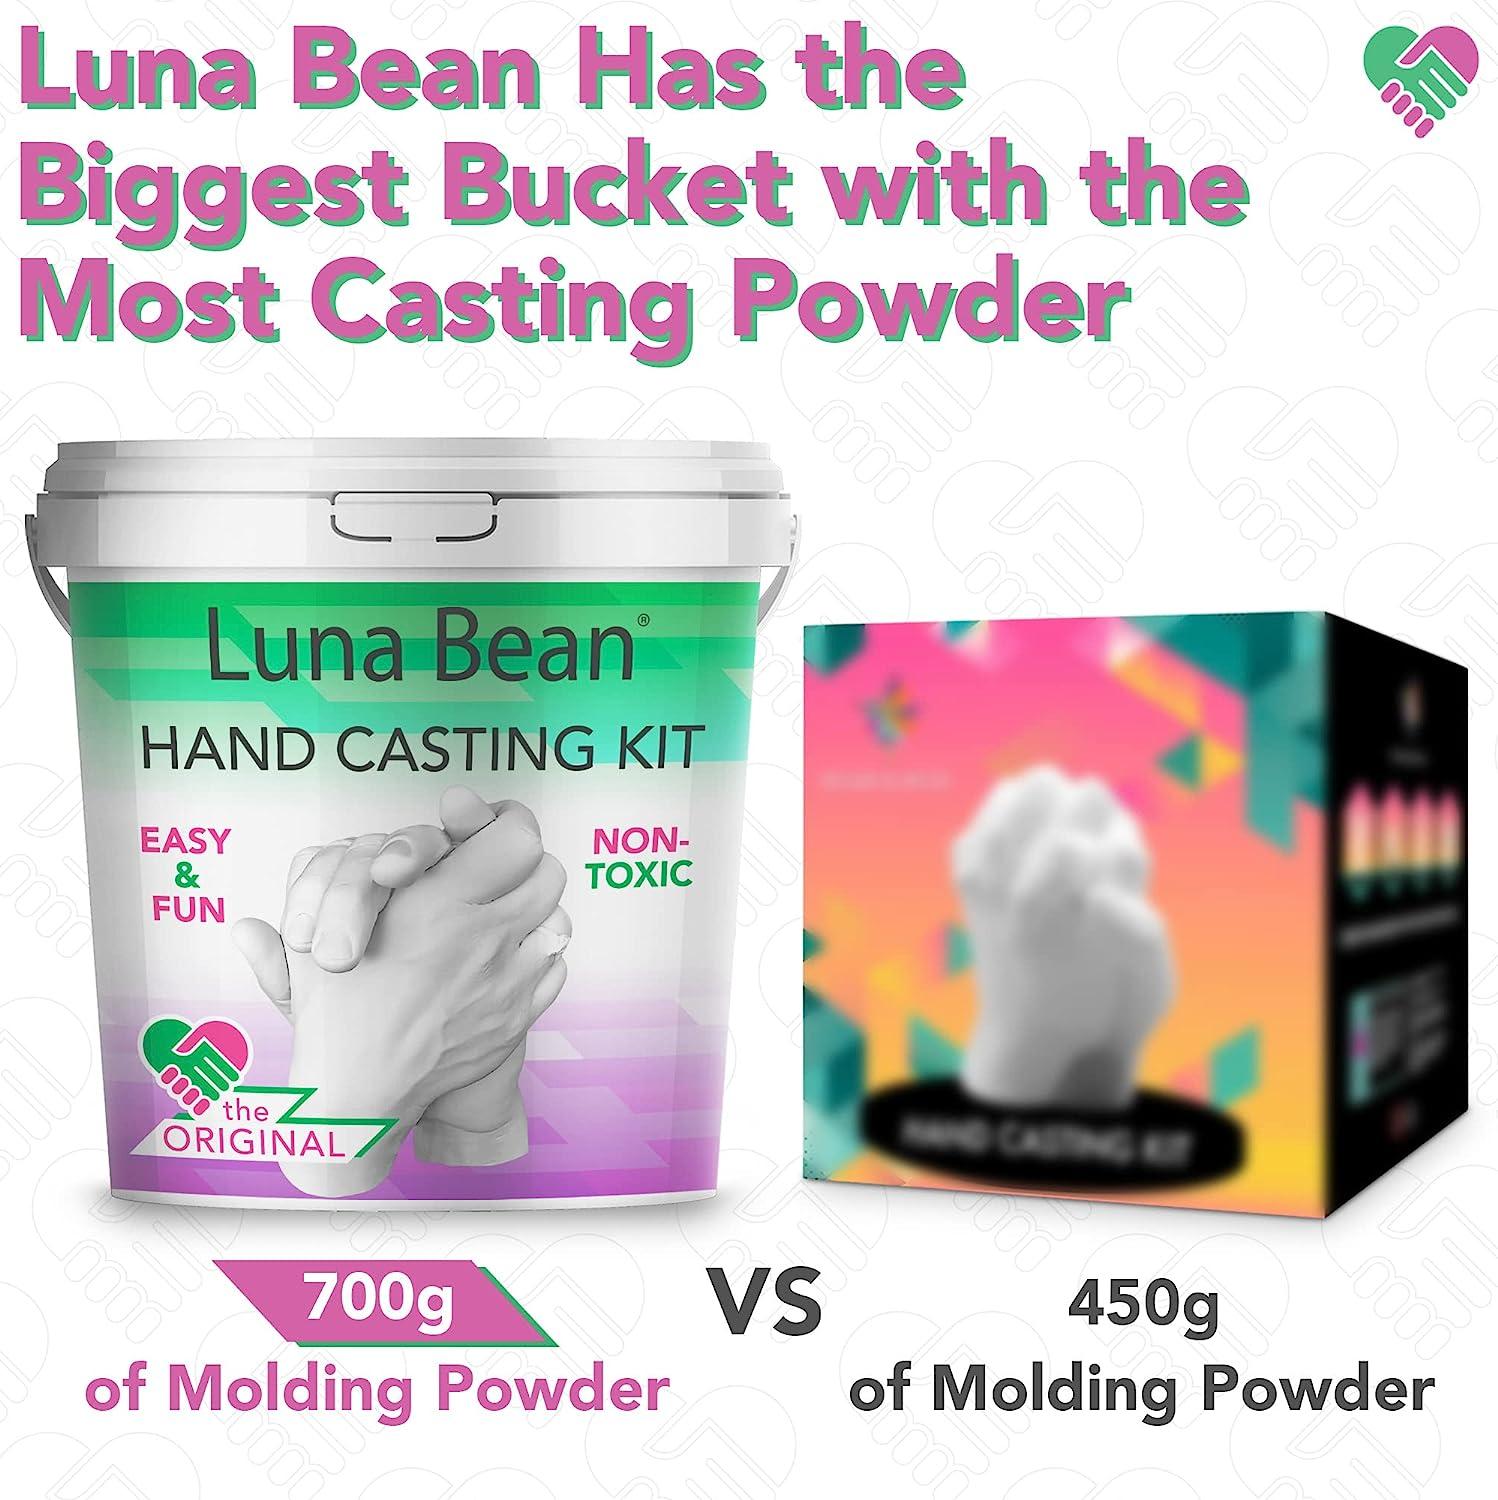 Luna Bean Keepsake Hands Casting KIT | Family Hand Molding | Clasped Group  Hand Sculpture KIT & Molding KIT